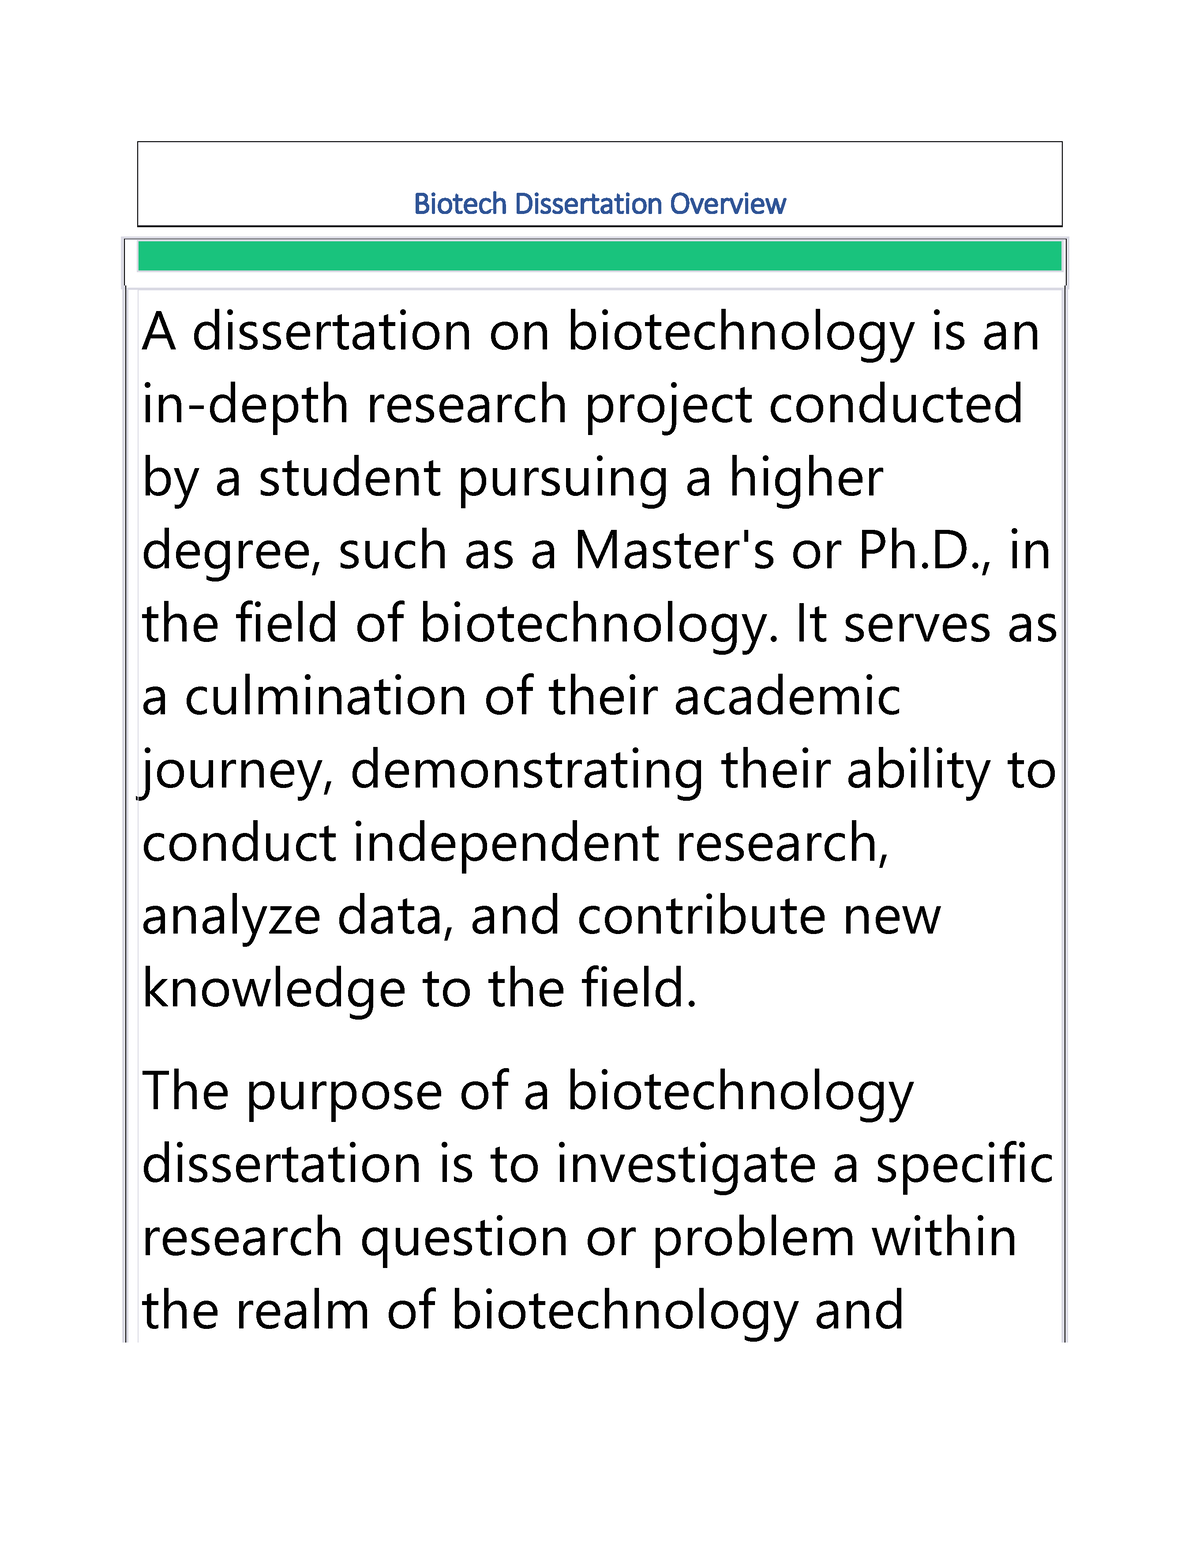 dissertation project biotechnology